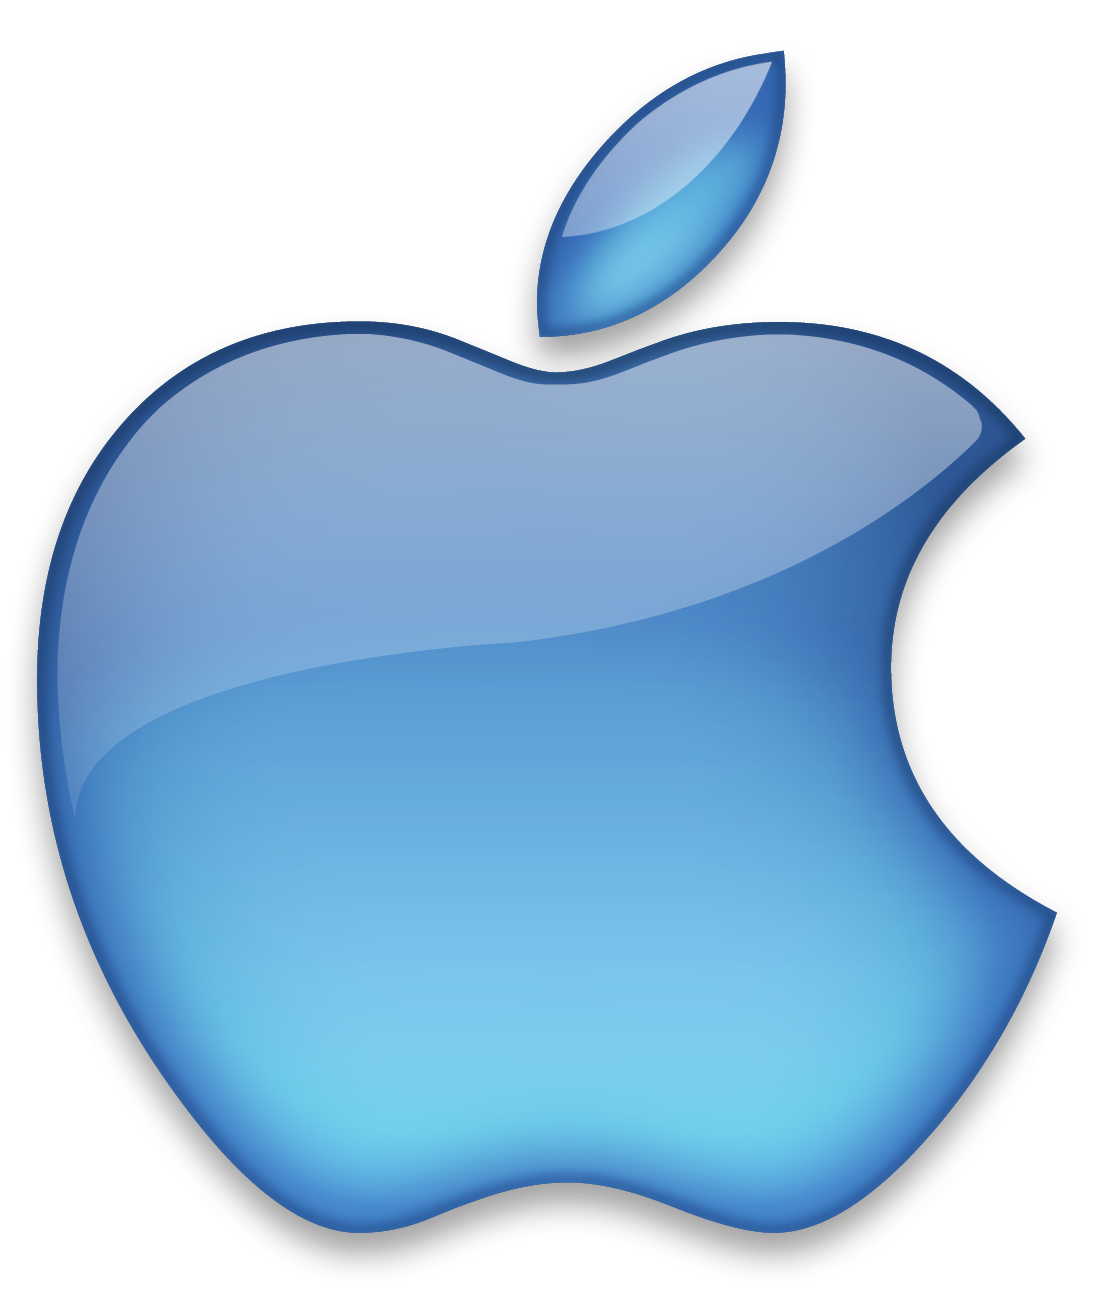 14 Apple Icons Symbols Images